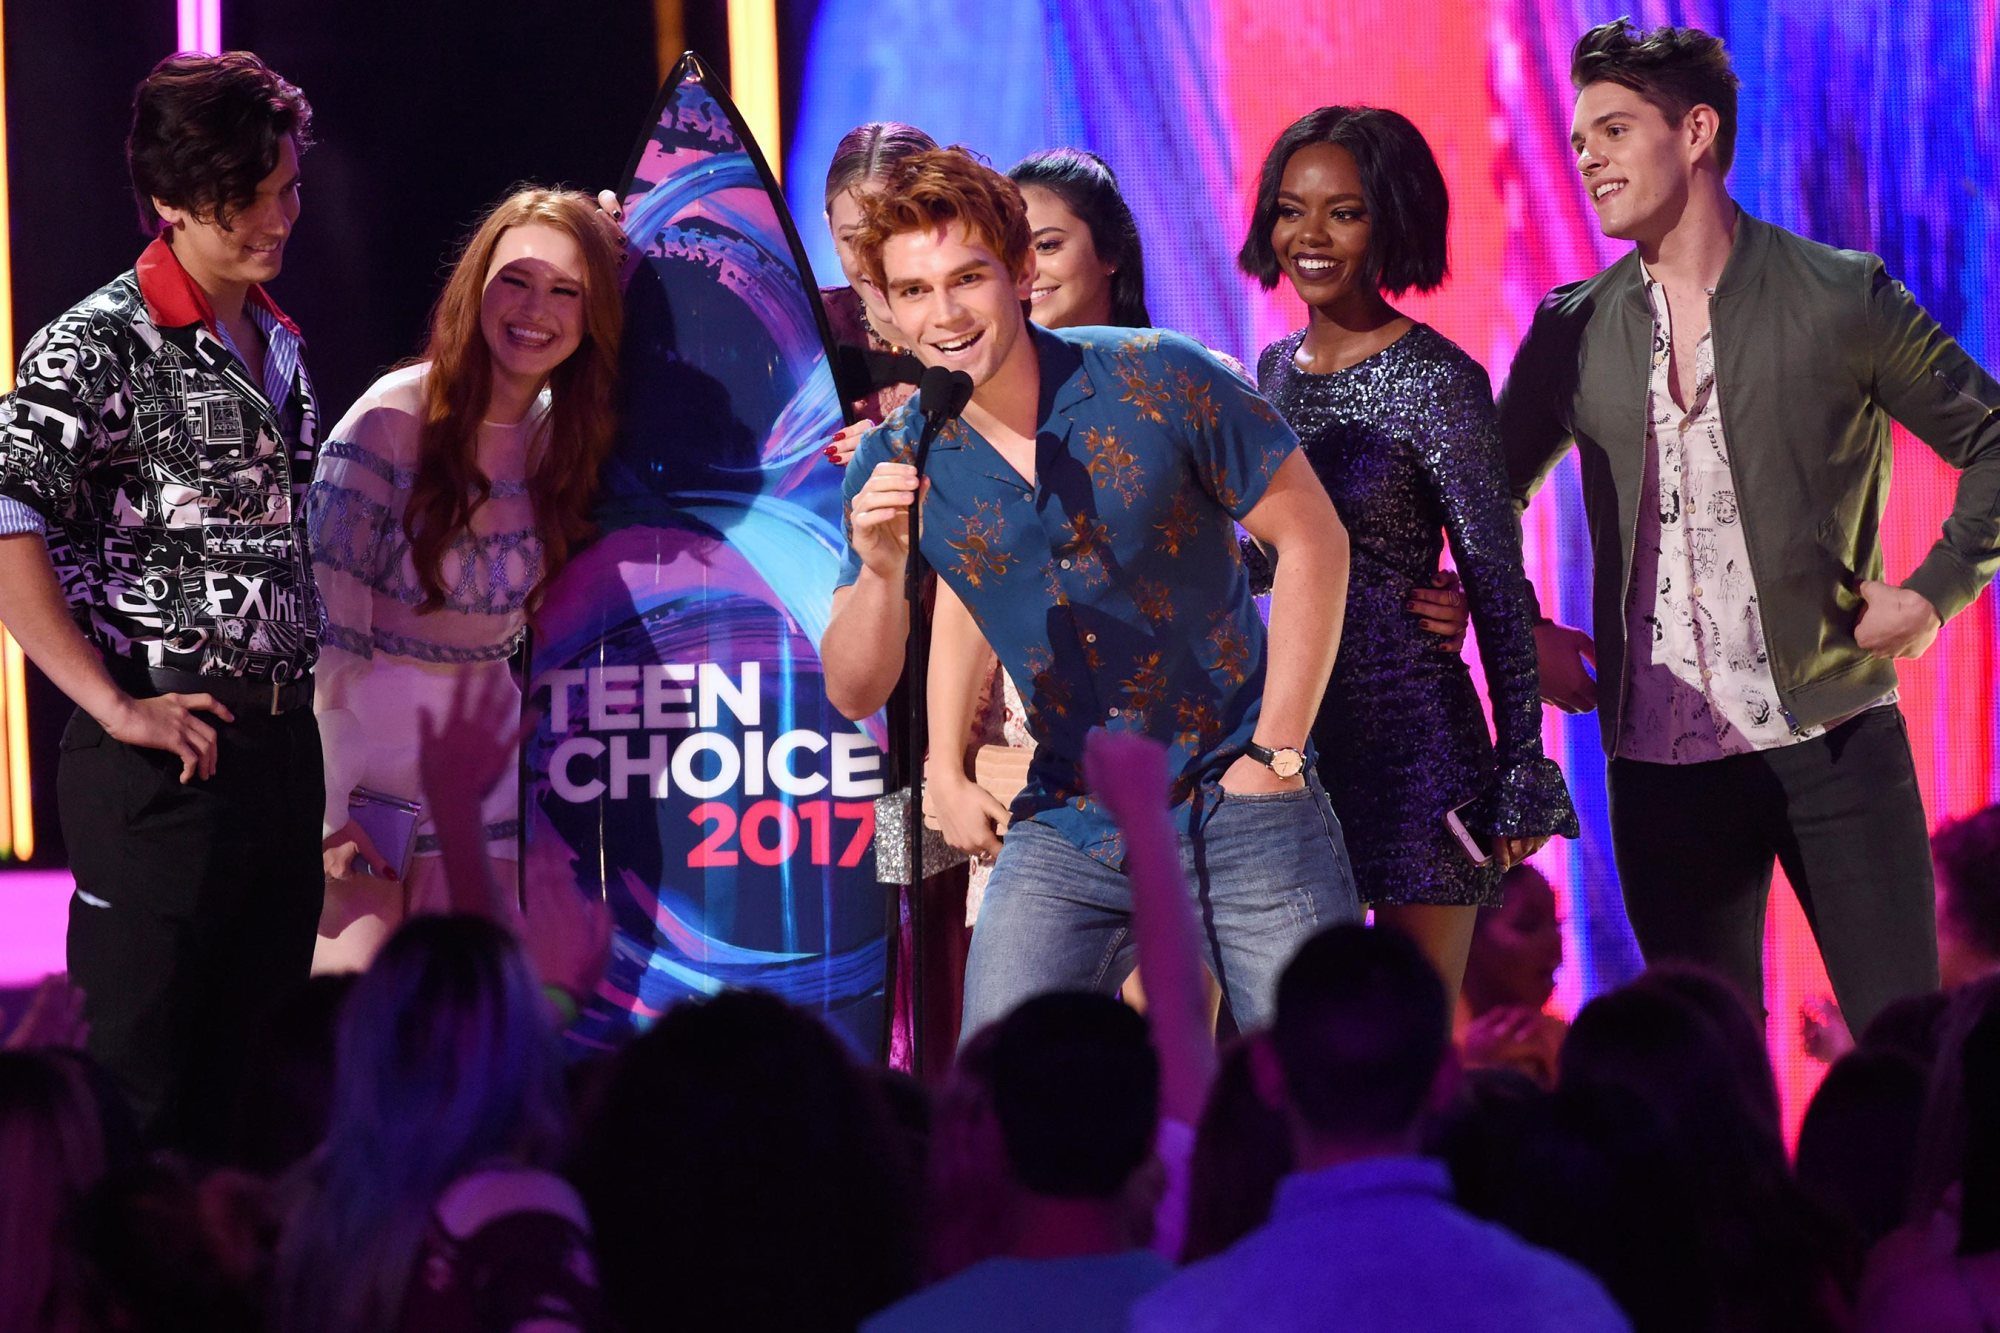 TEEN CHOICE AWARDS | Warner Channel transmite premiação neste domingo!